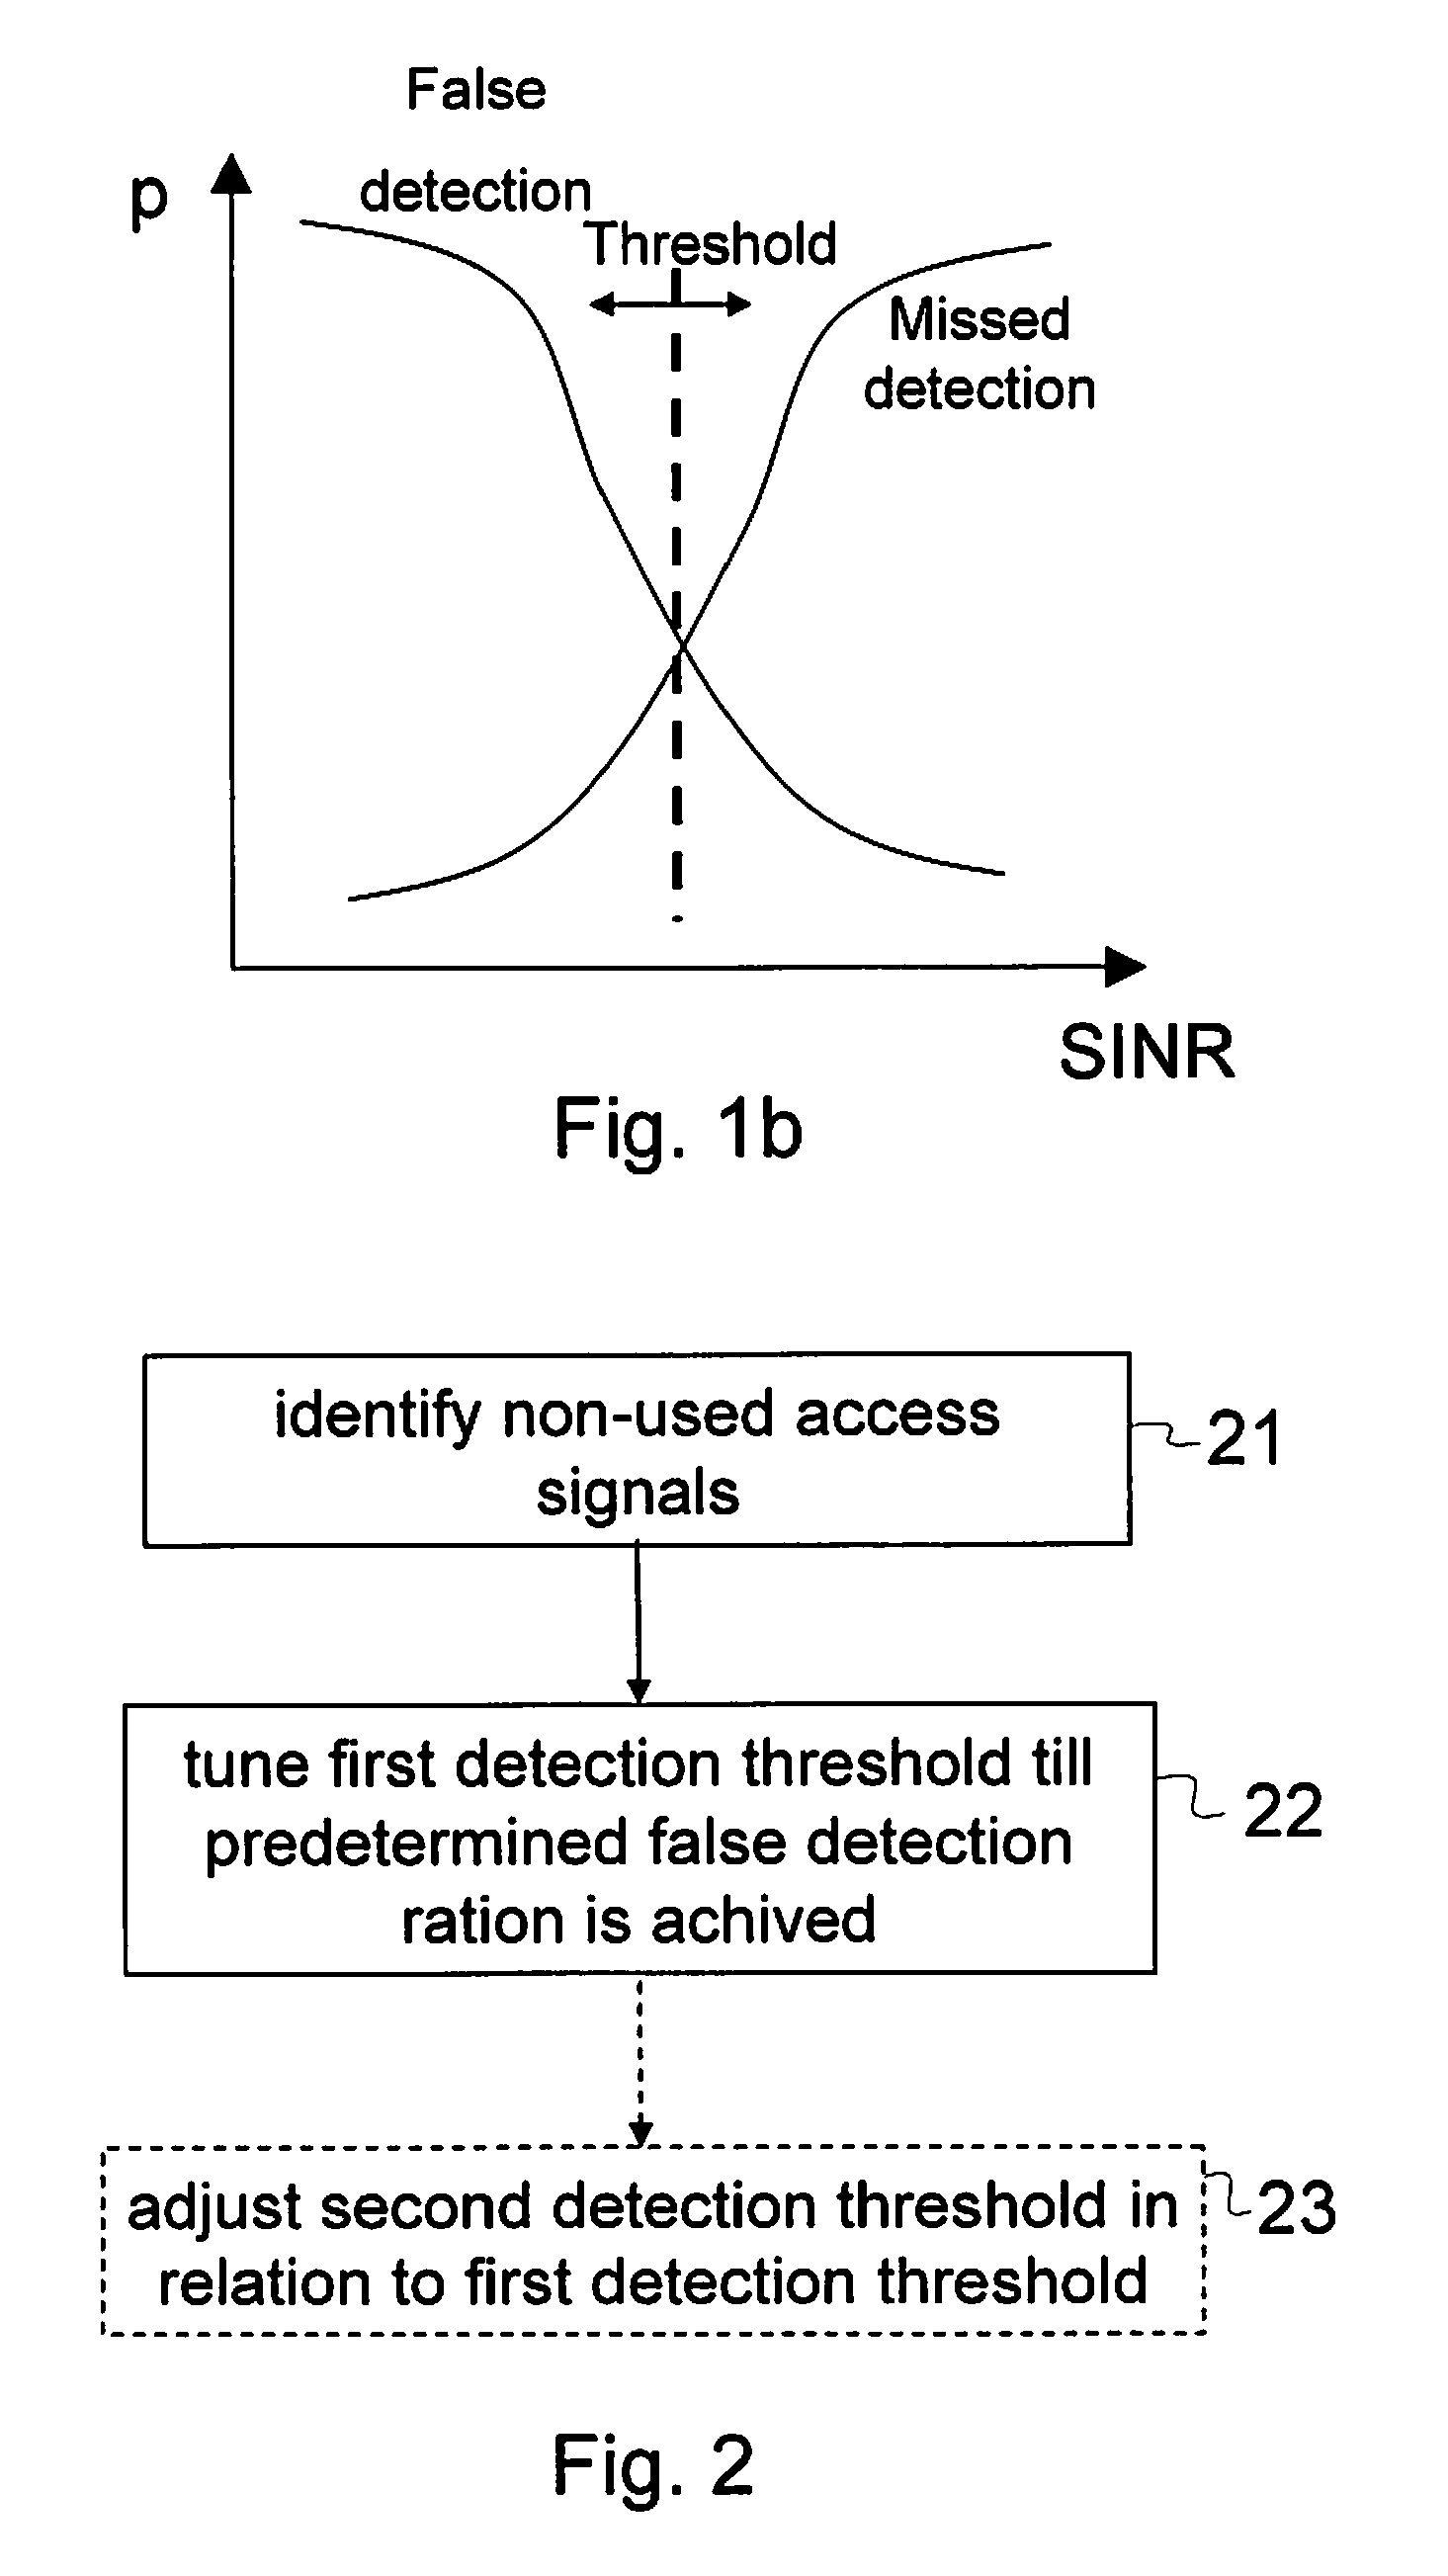 Adjustment of radio detection level for request signals based observed false detection